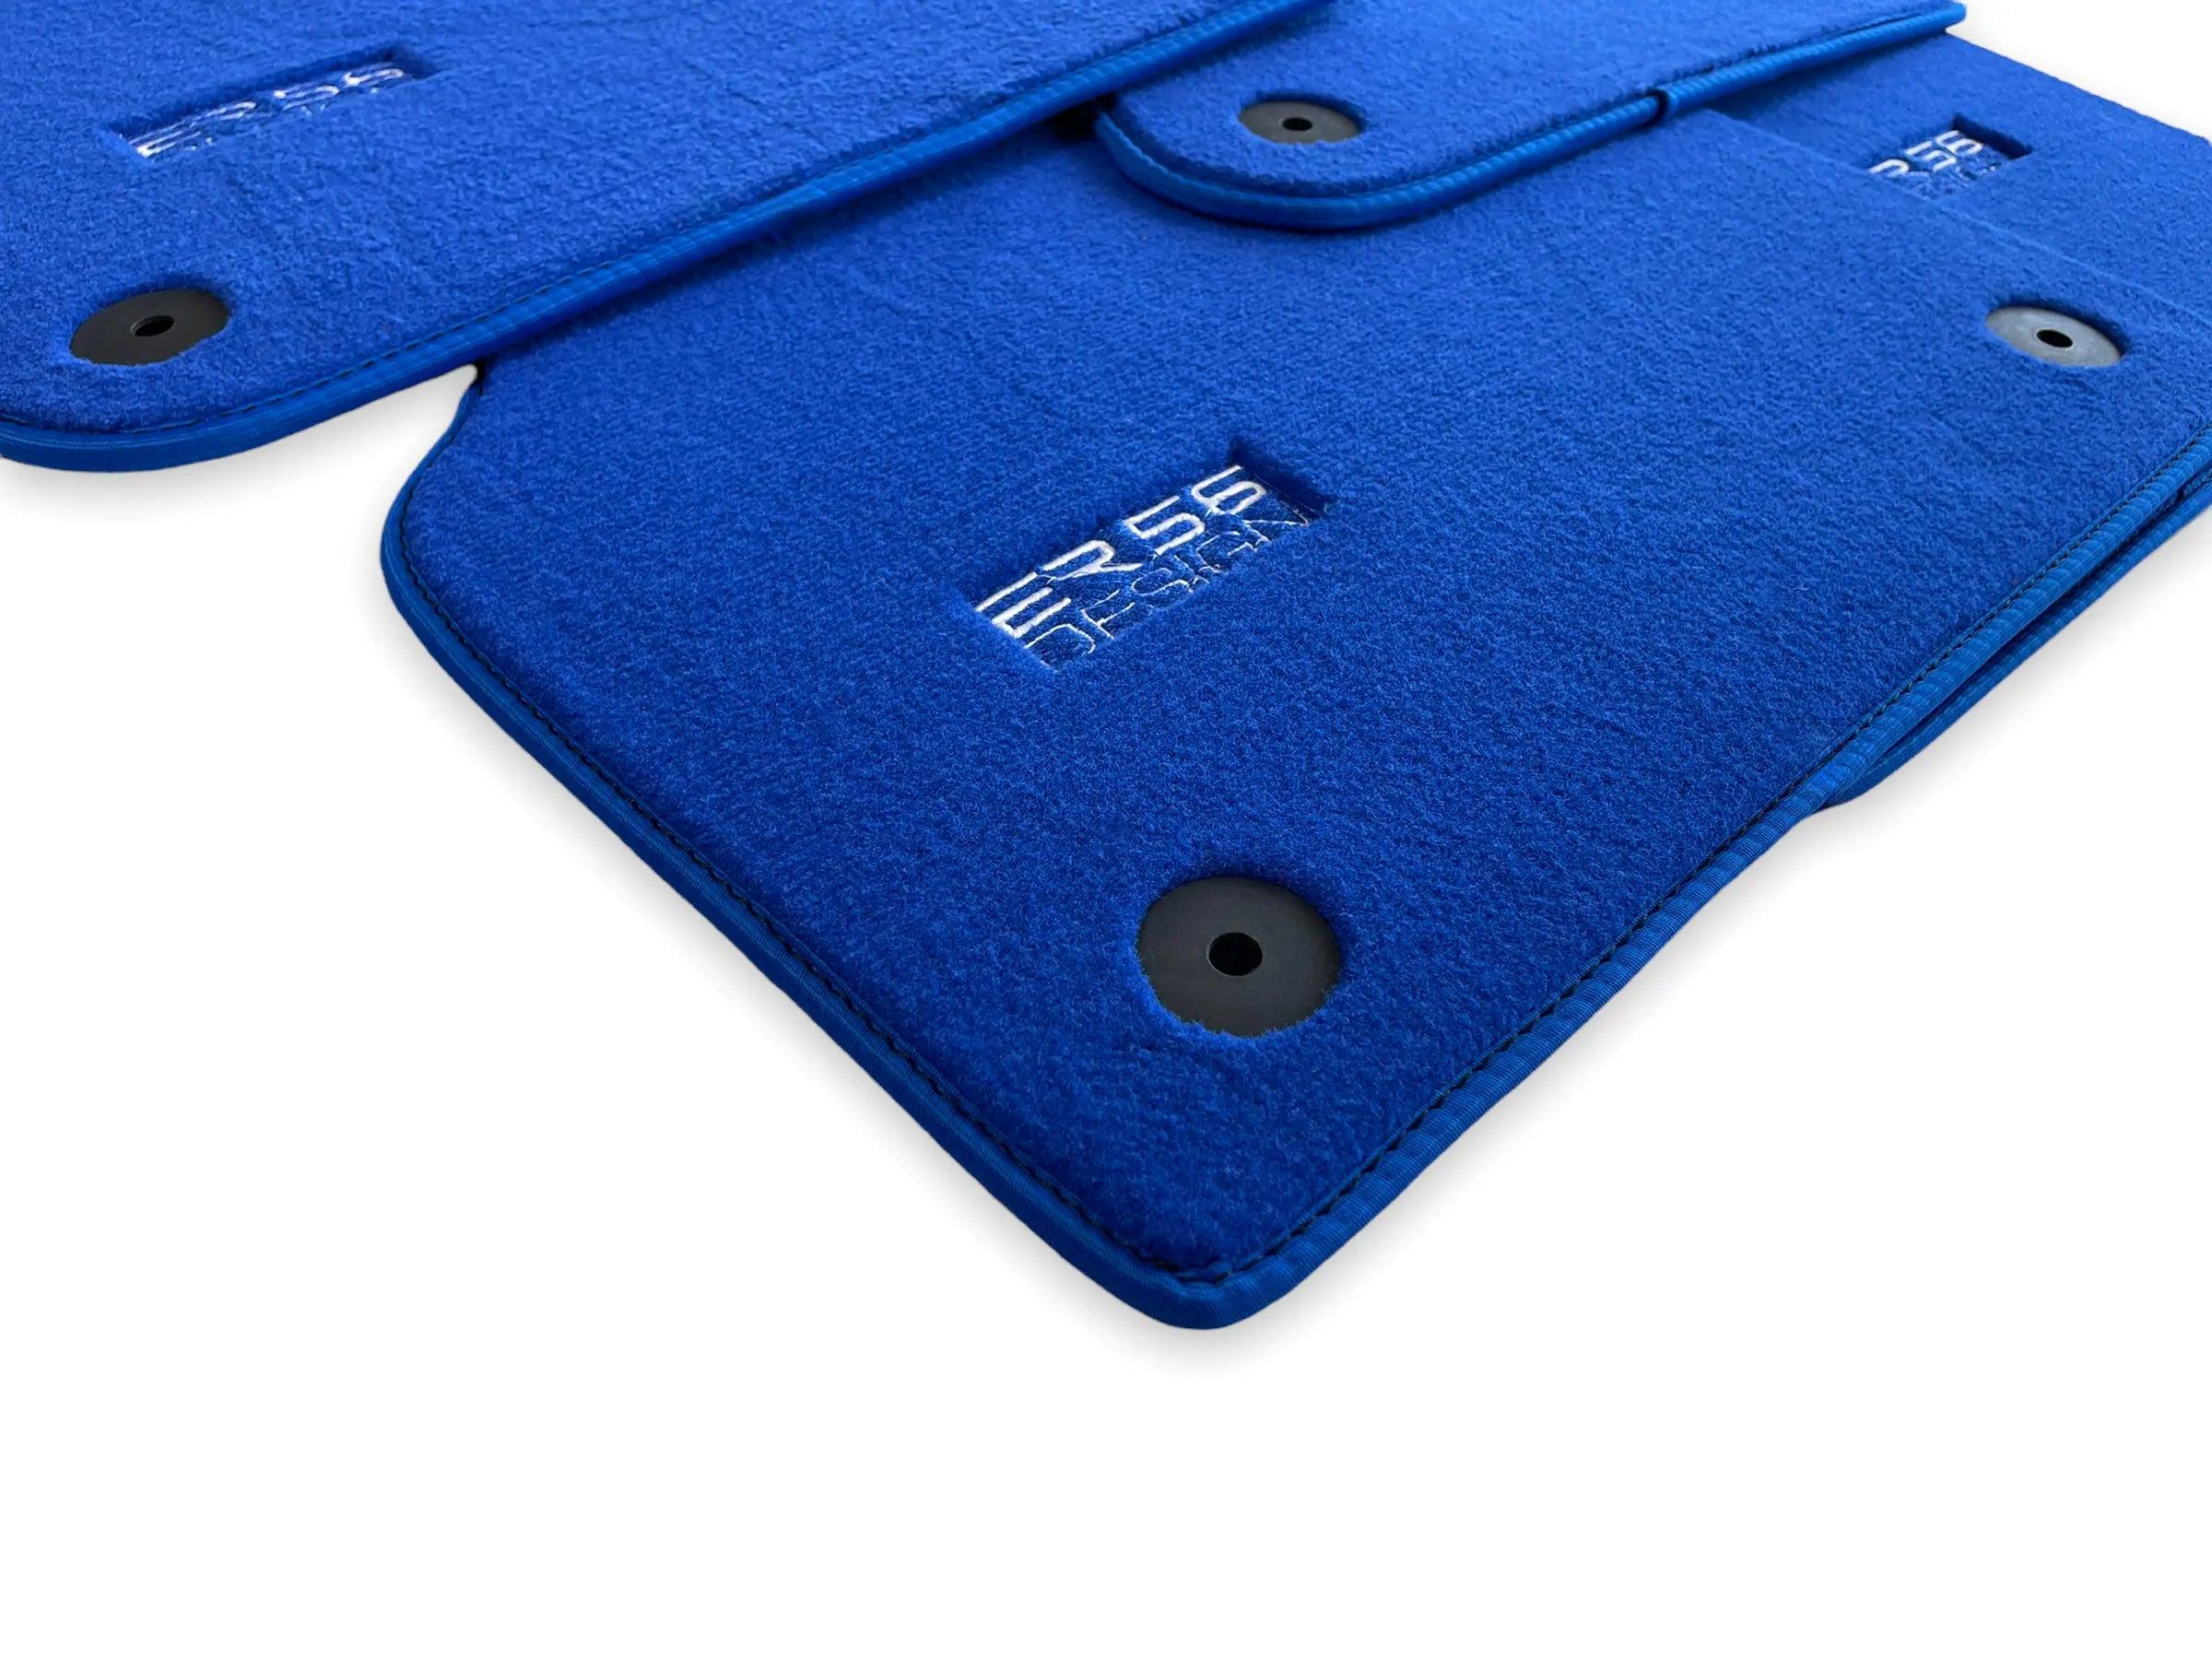 Blue Floor Mats for Audi Q7 4L (2006-2015) | ER56 Design